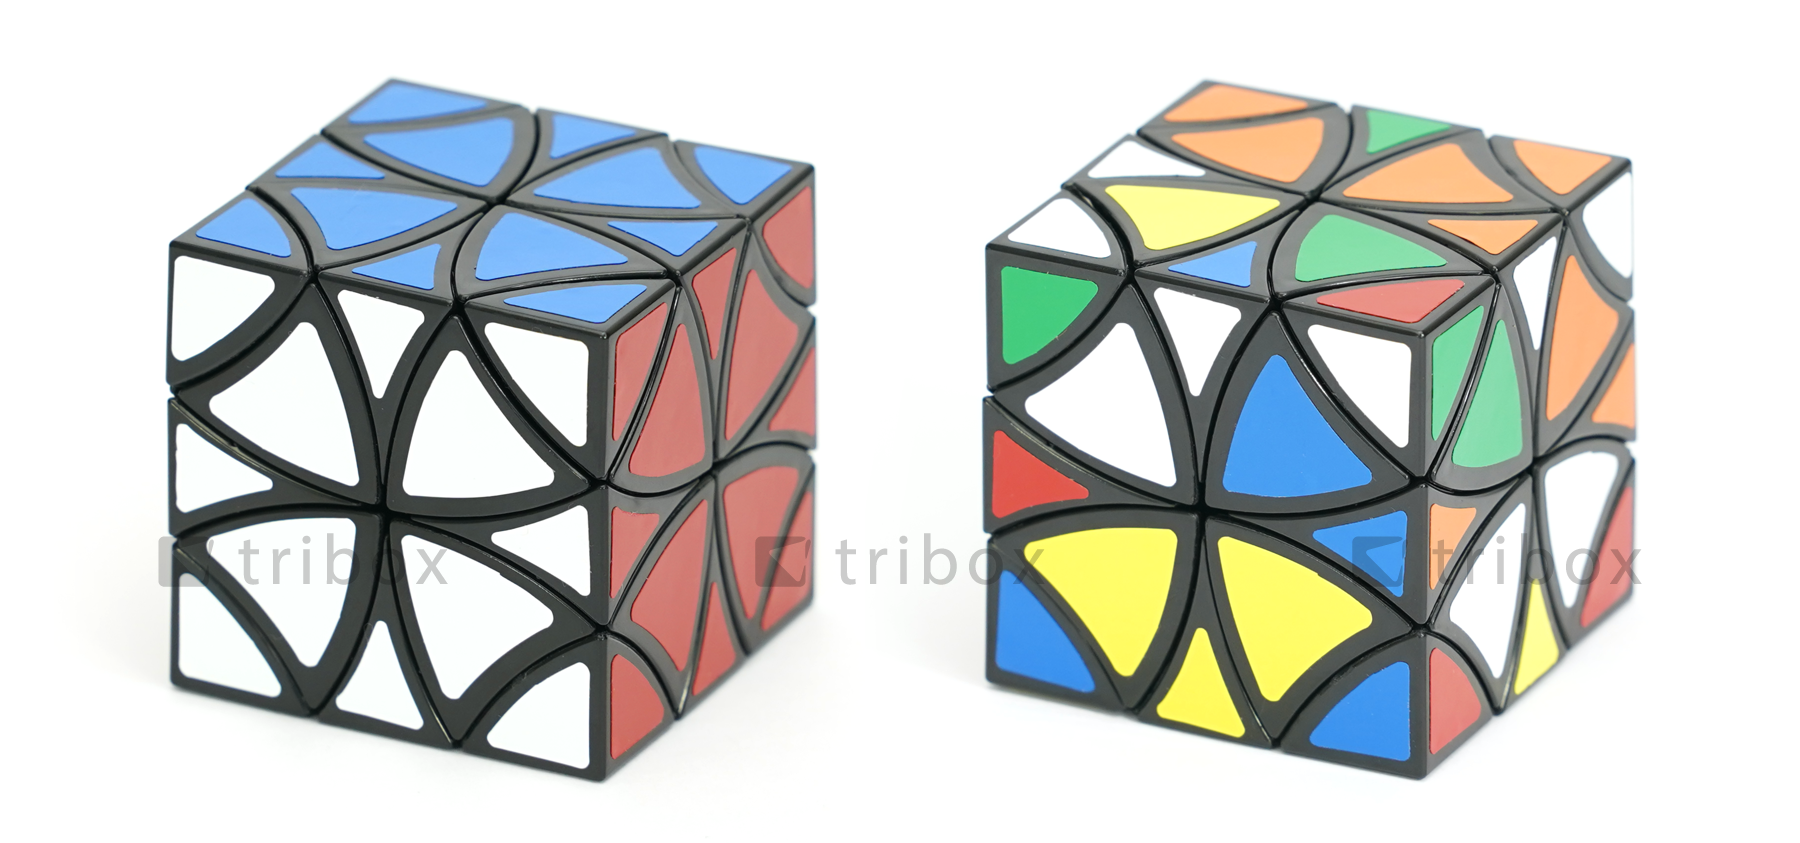 triboxストア / LanLan Curvy Copter Cube